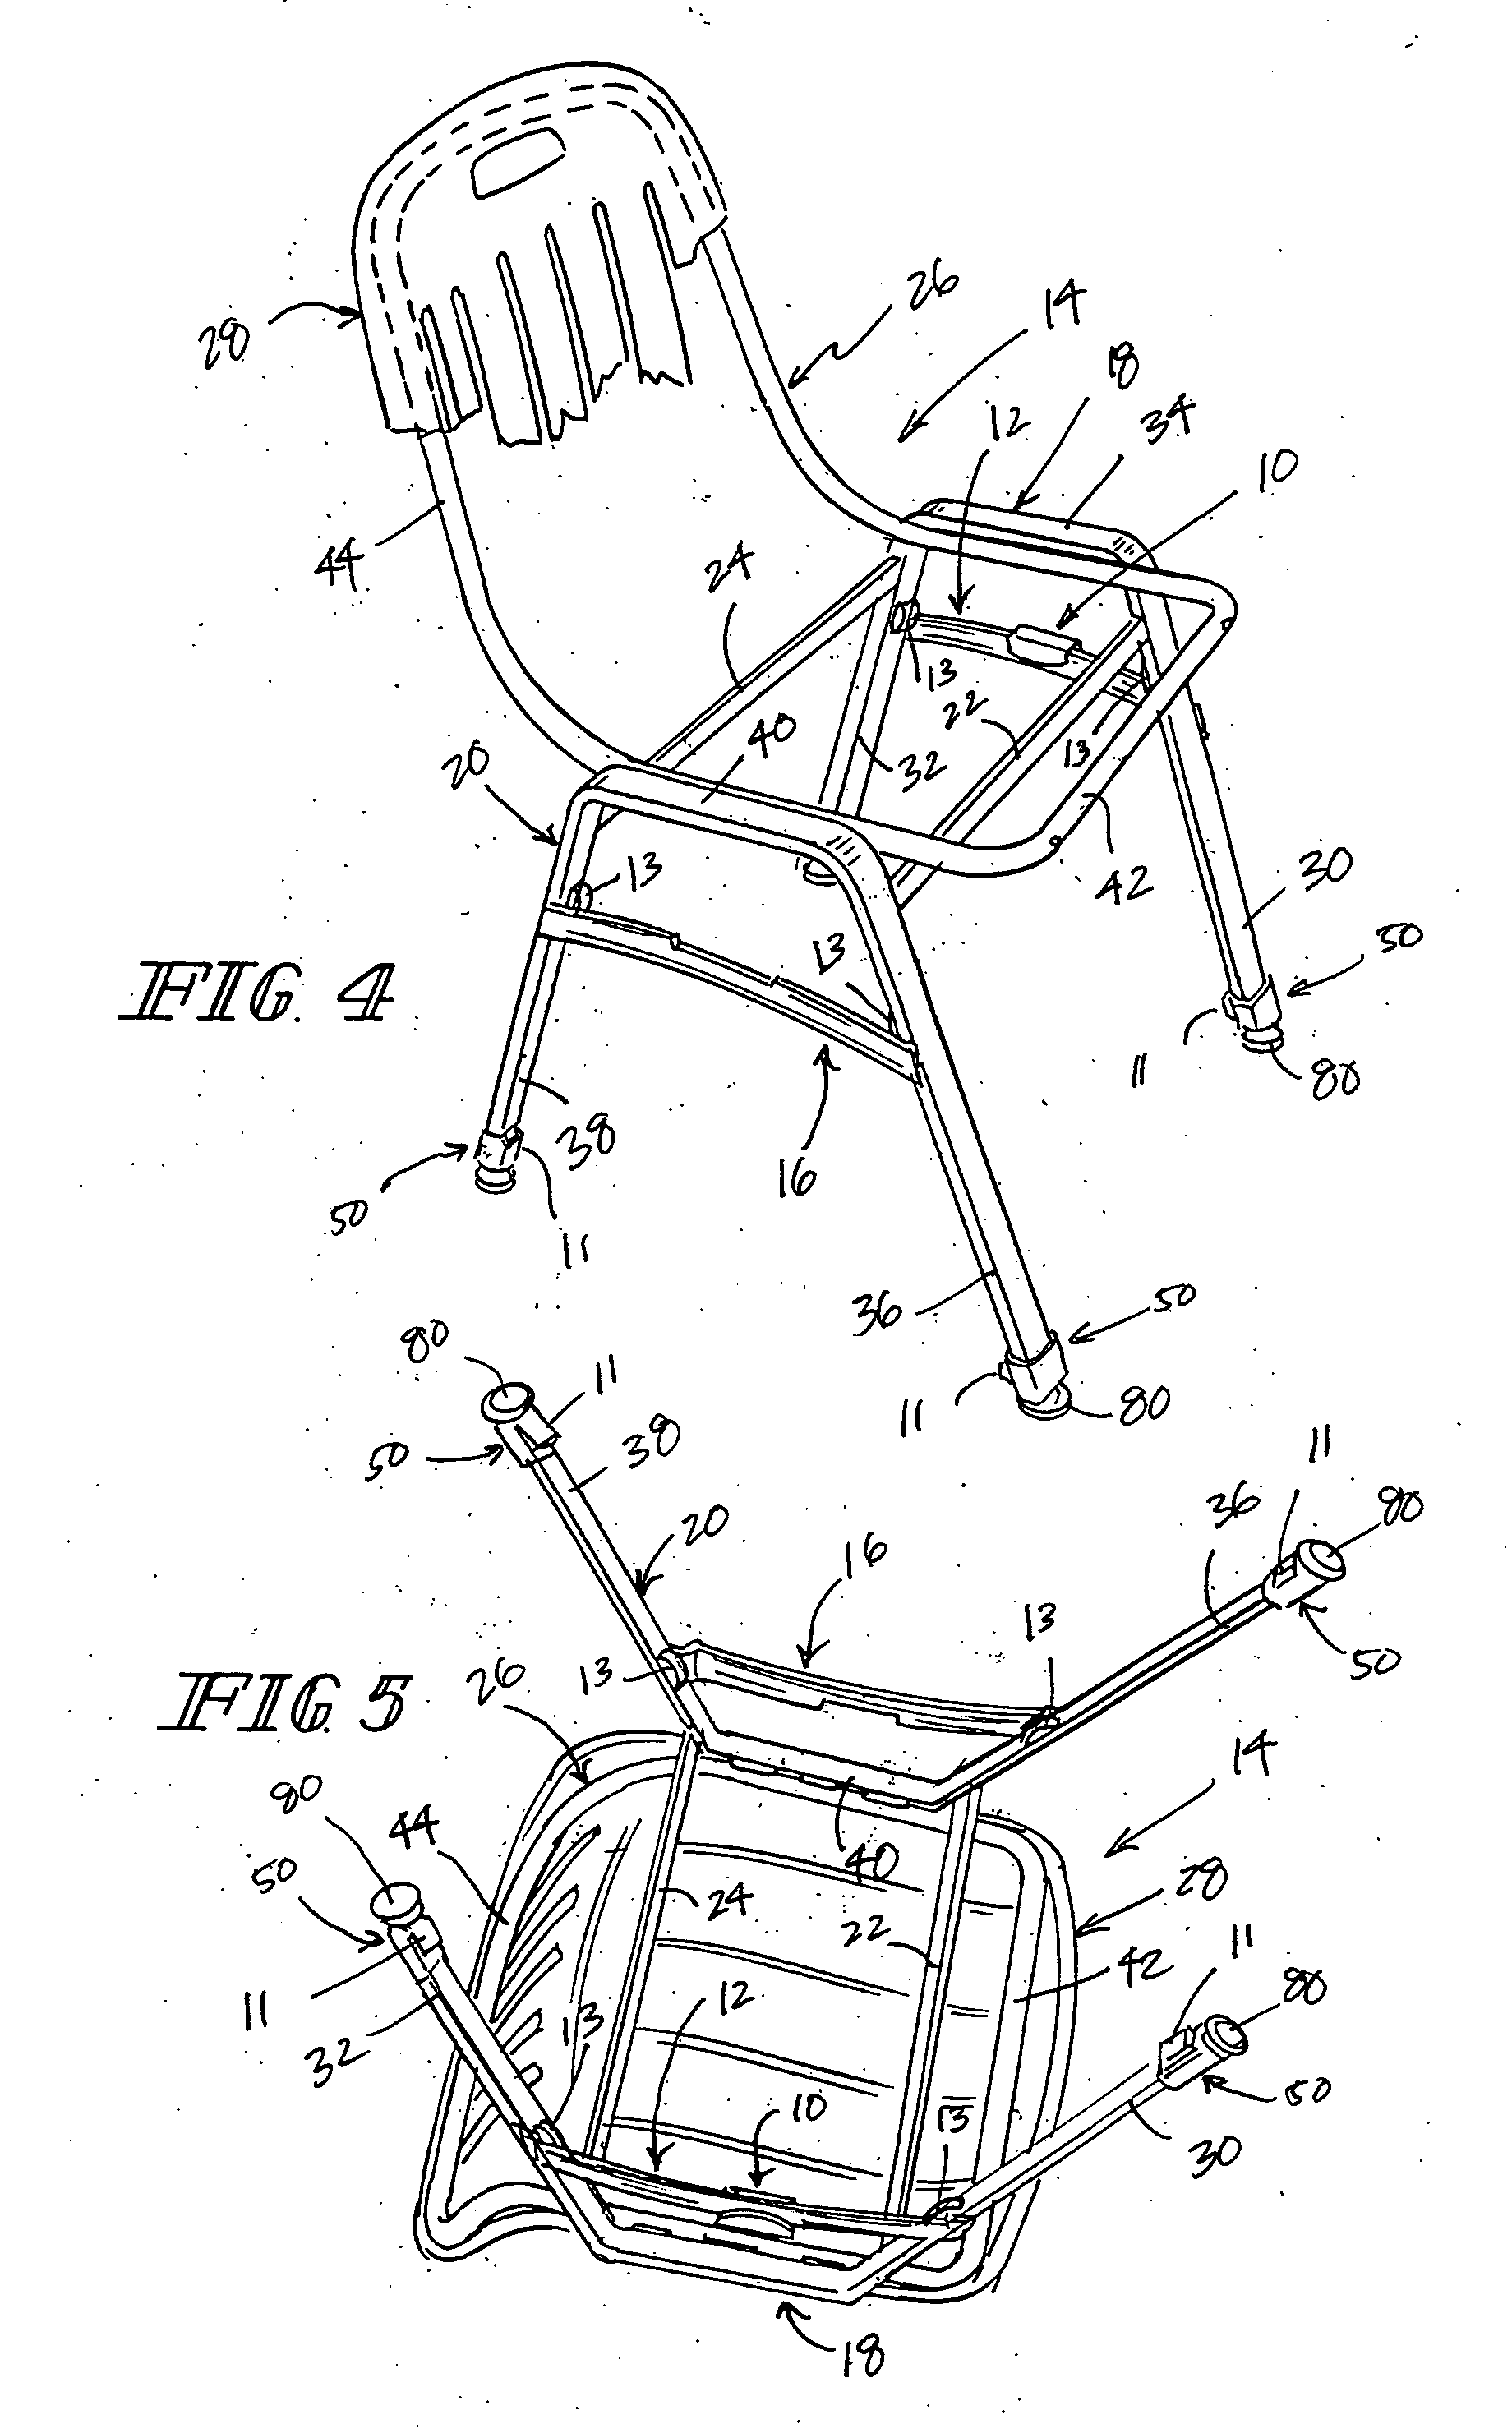 Chair stacker apparatus